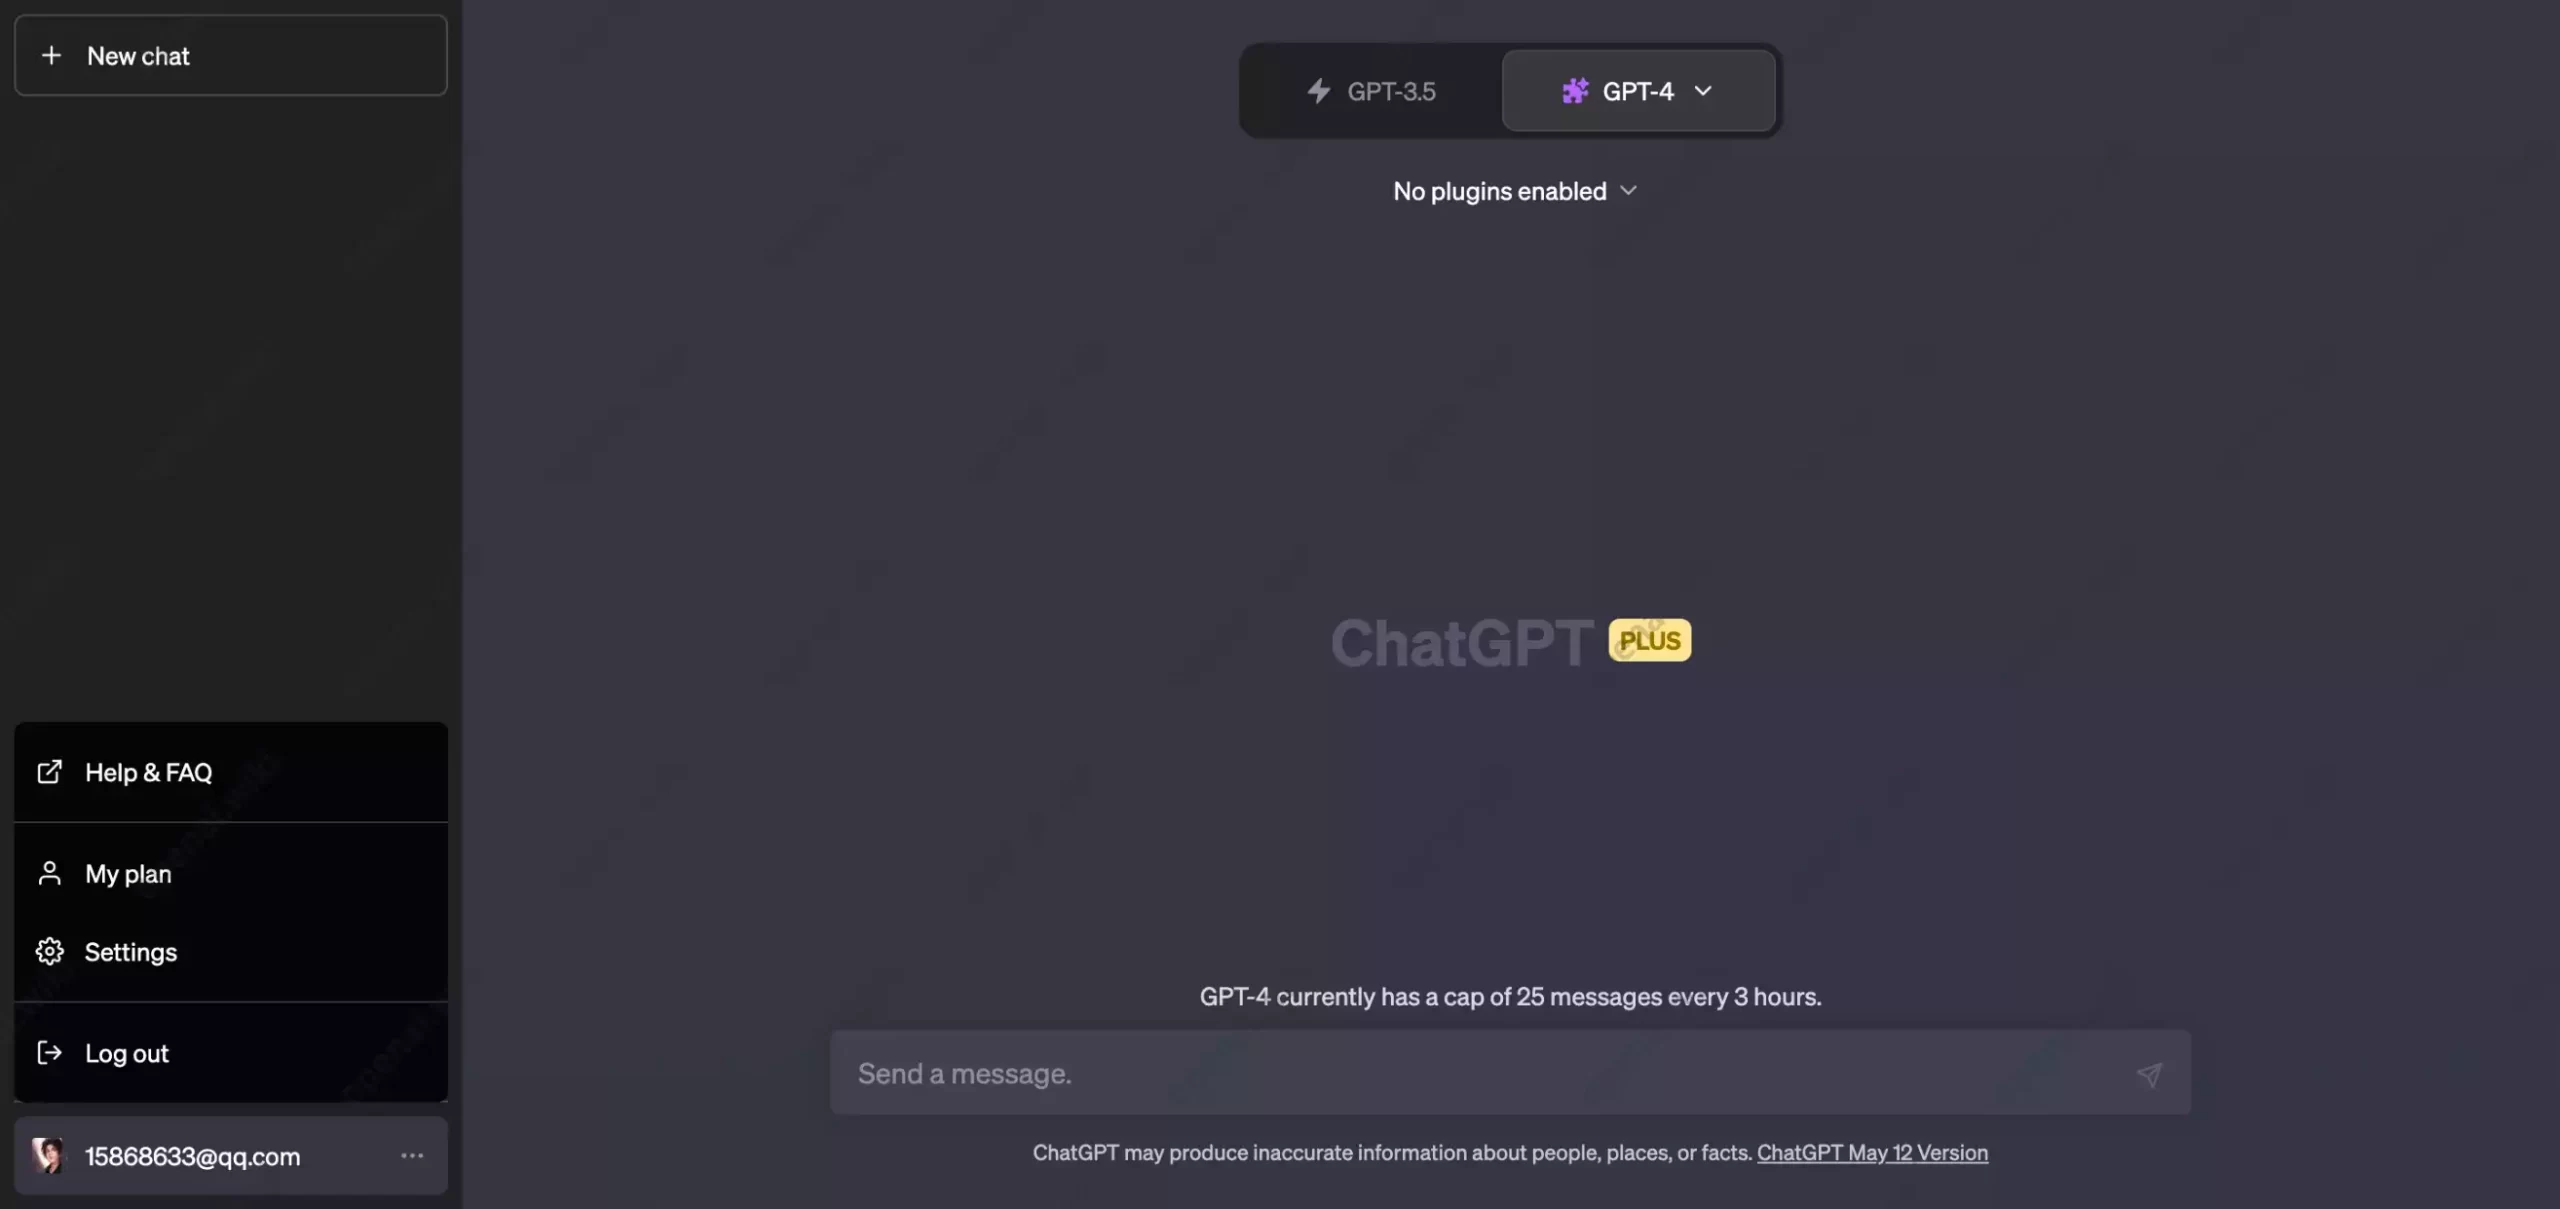 ChatGPT｜插件教程 - 1-openAI维基百科